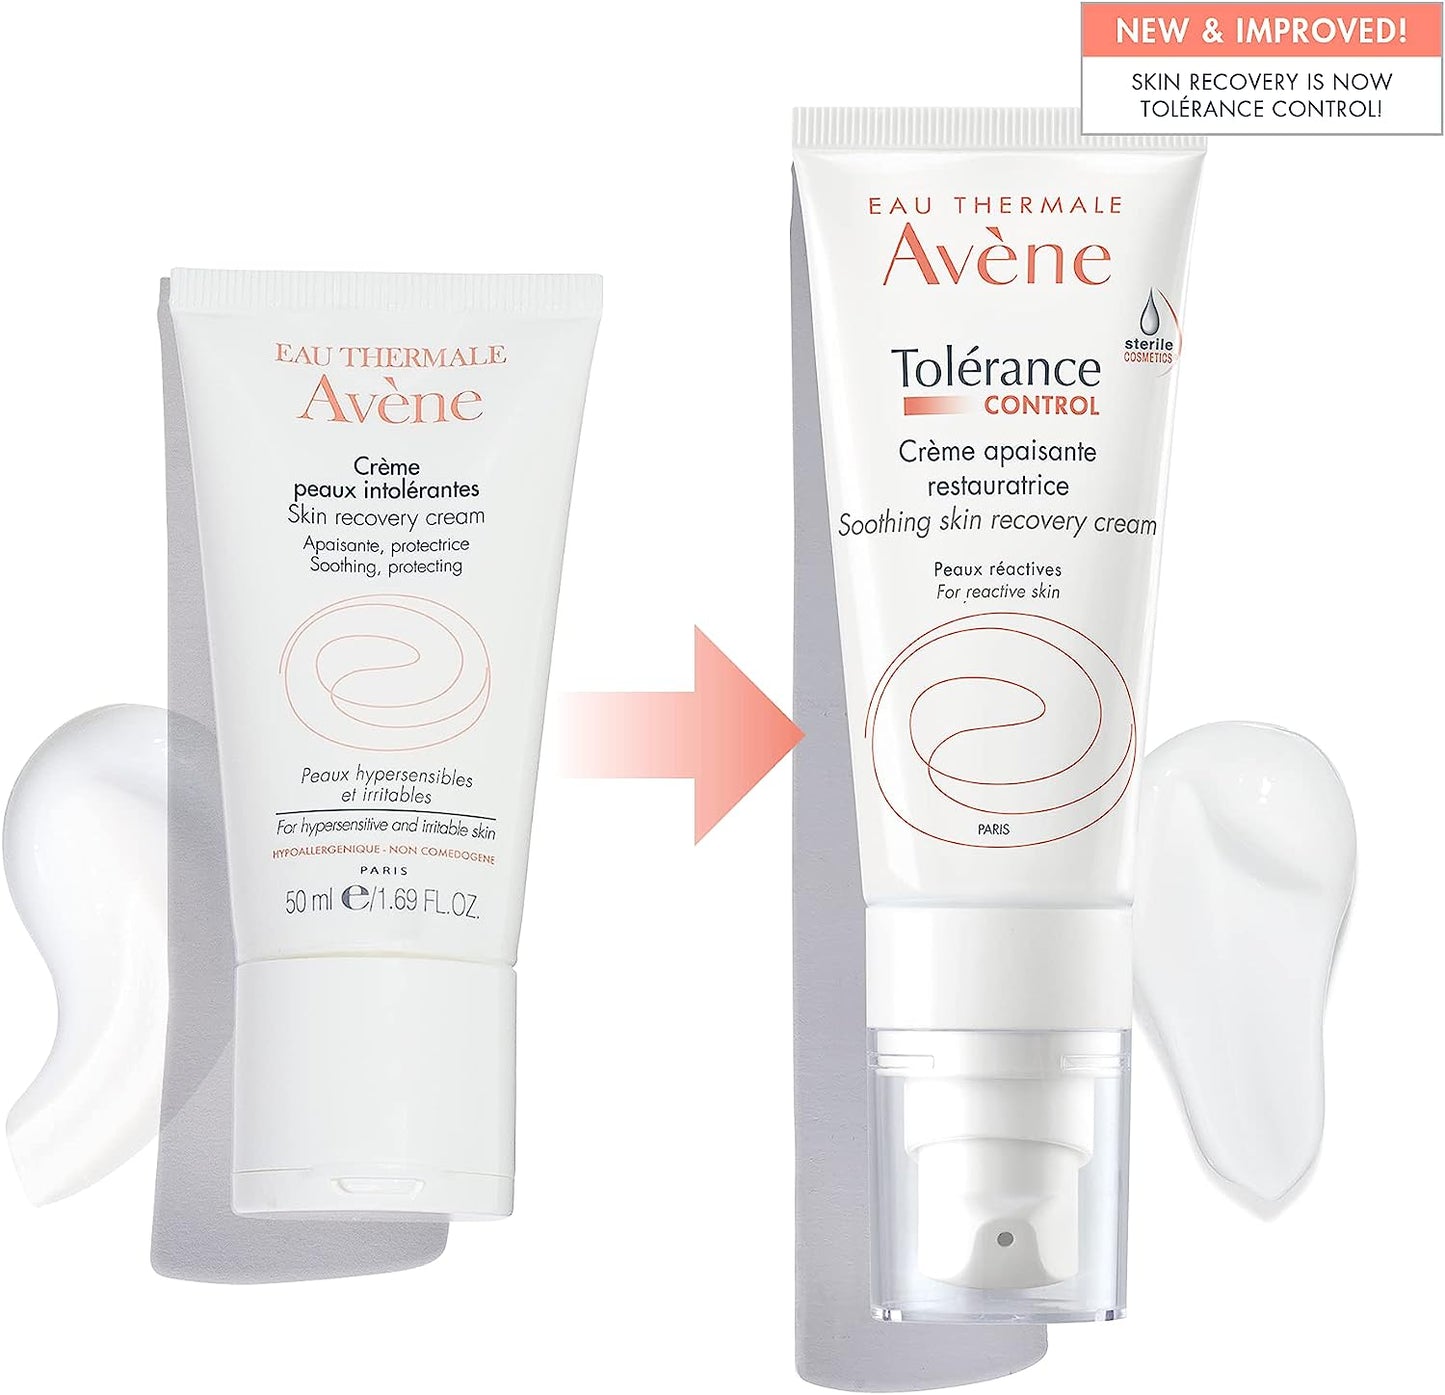 Avene Tolerance Control Soothing Skin Recovery Cream for Sensitive Skin 40ml